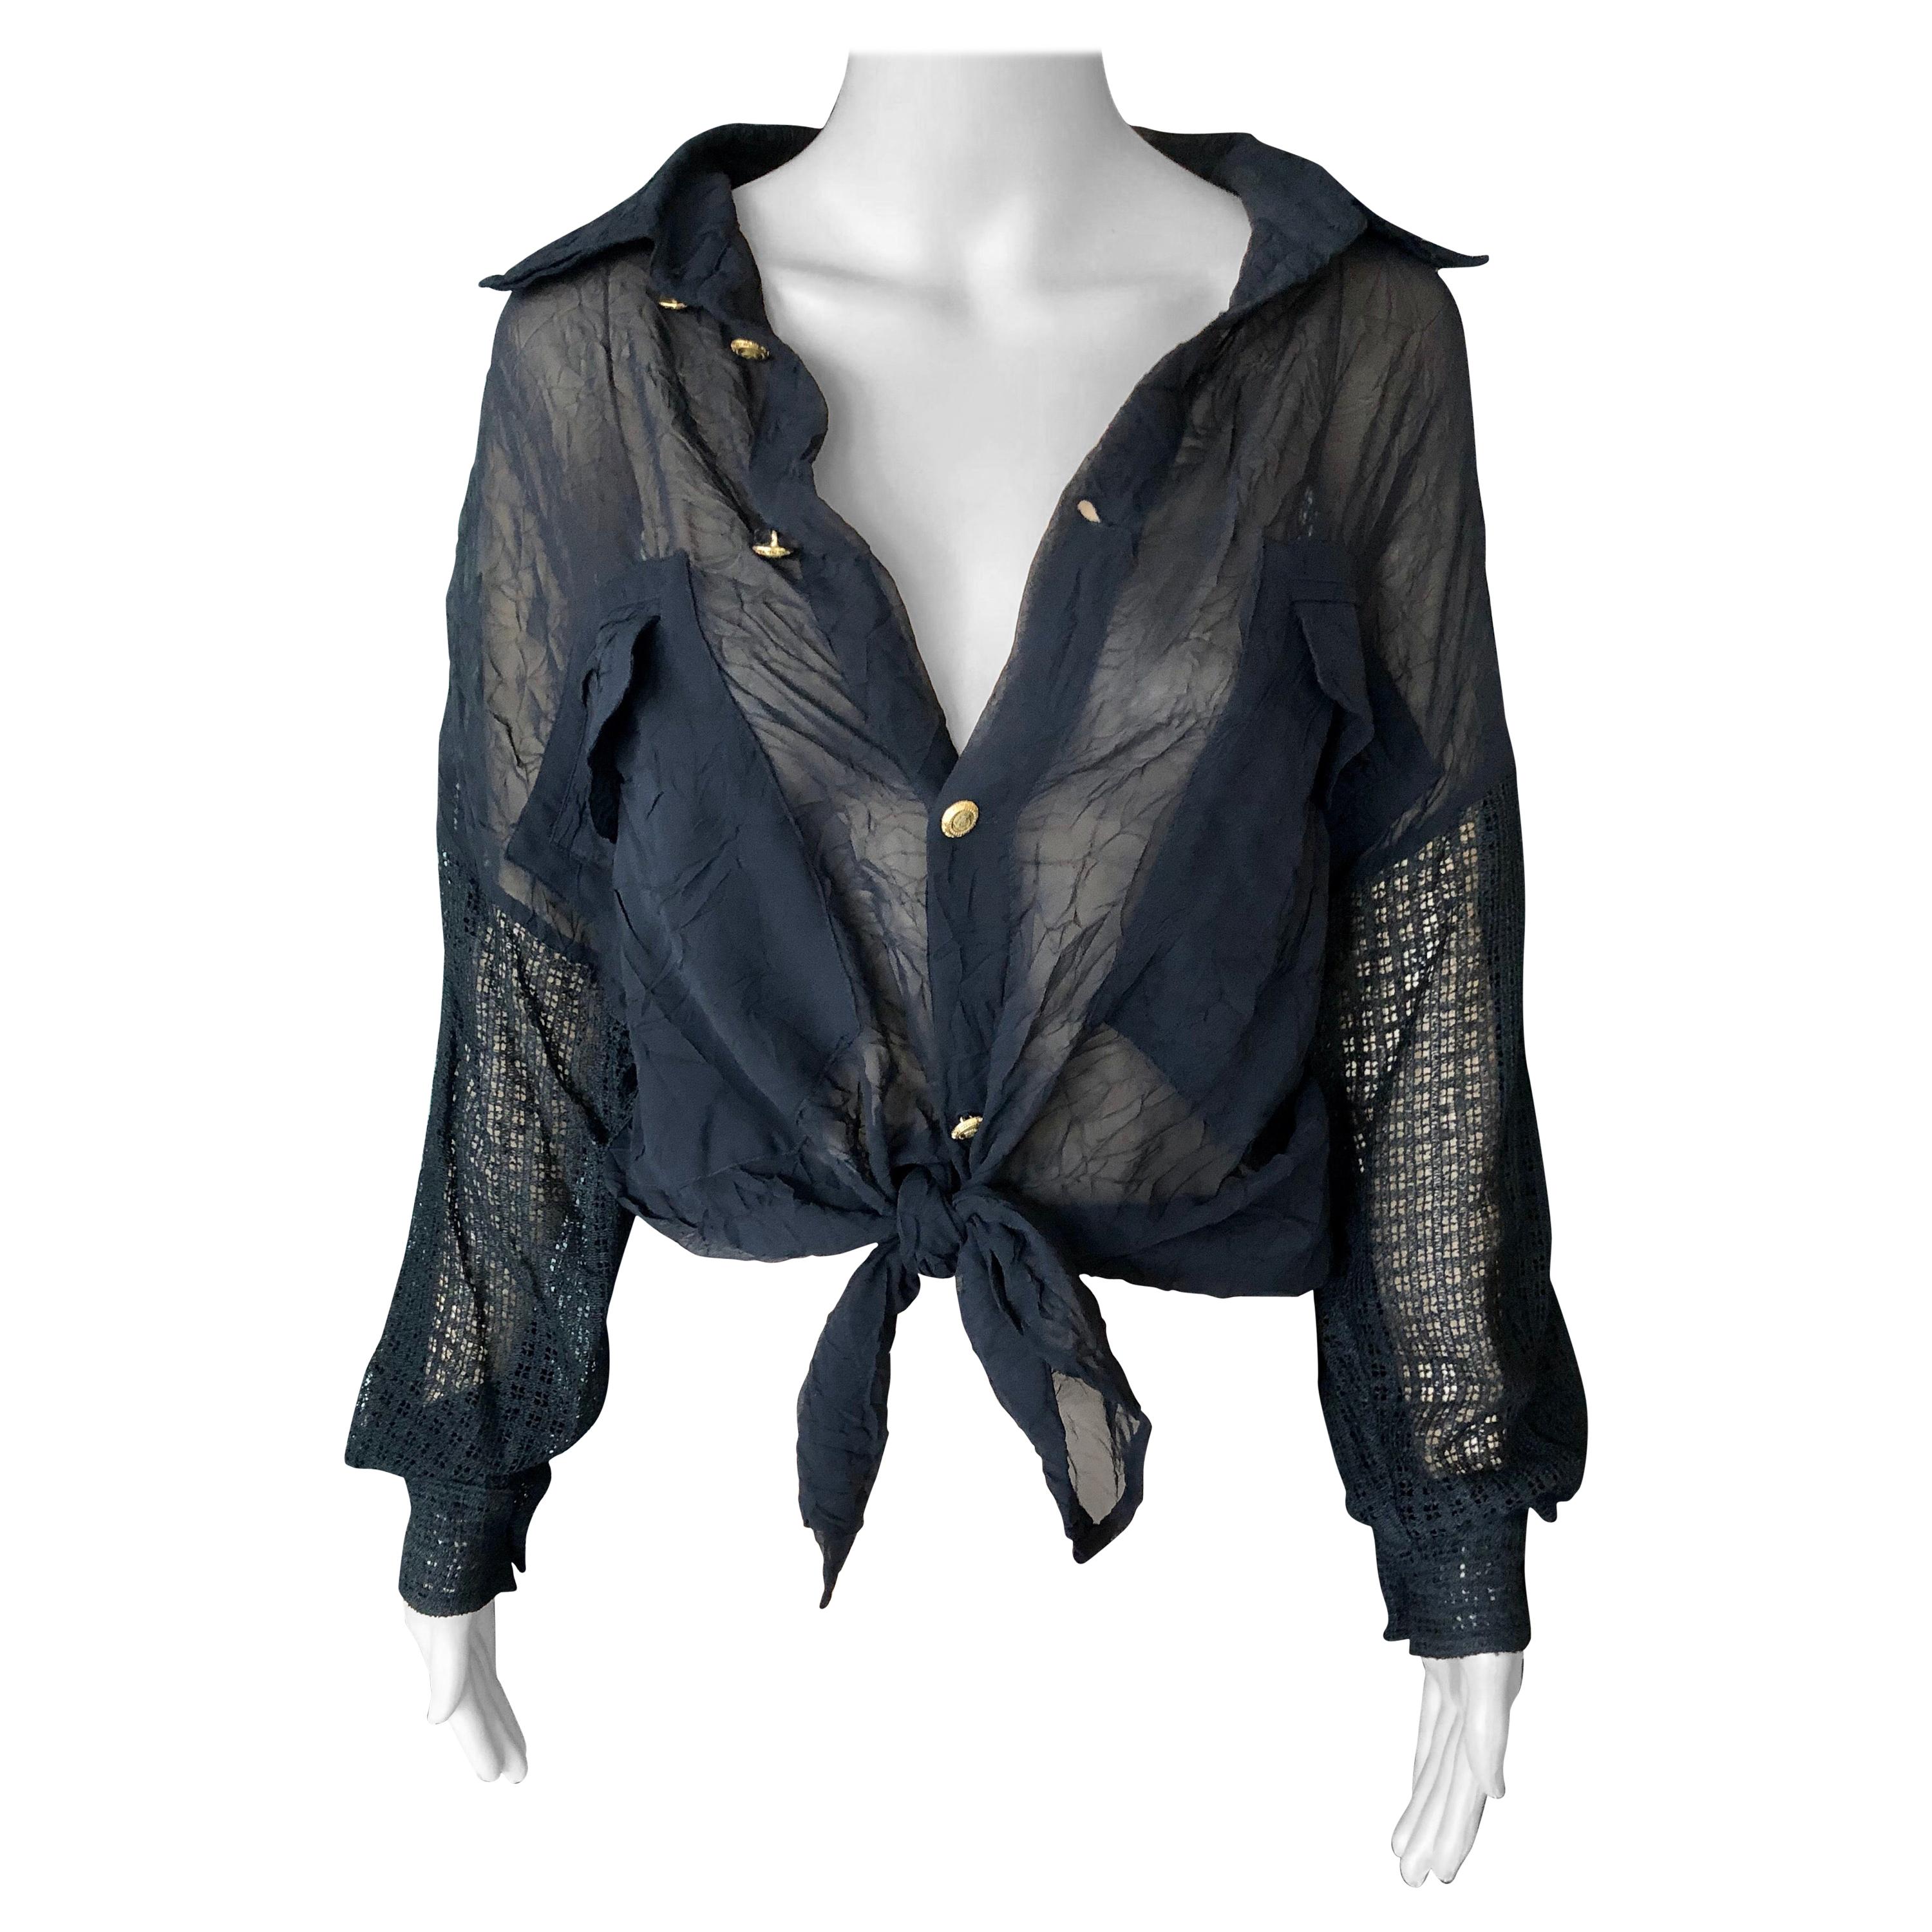 Gianni Versace c. 1990 Vintage Sheer Silk Mesh Black Shirt Blouse Top